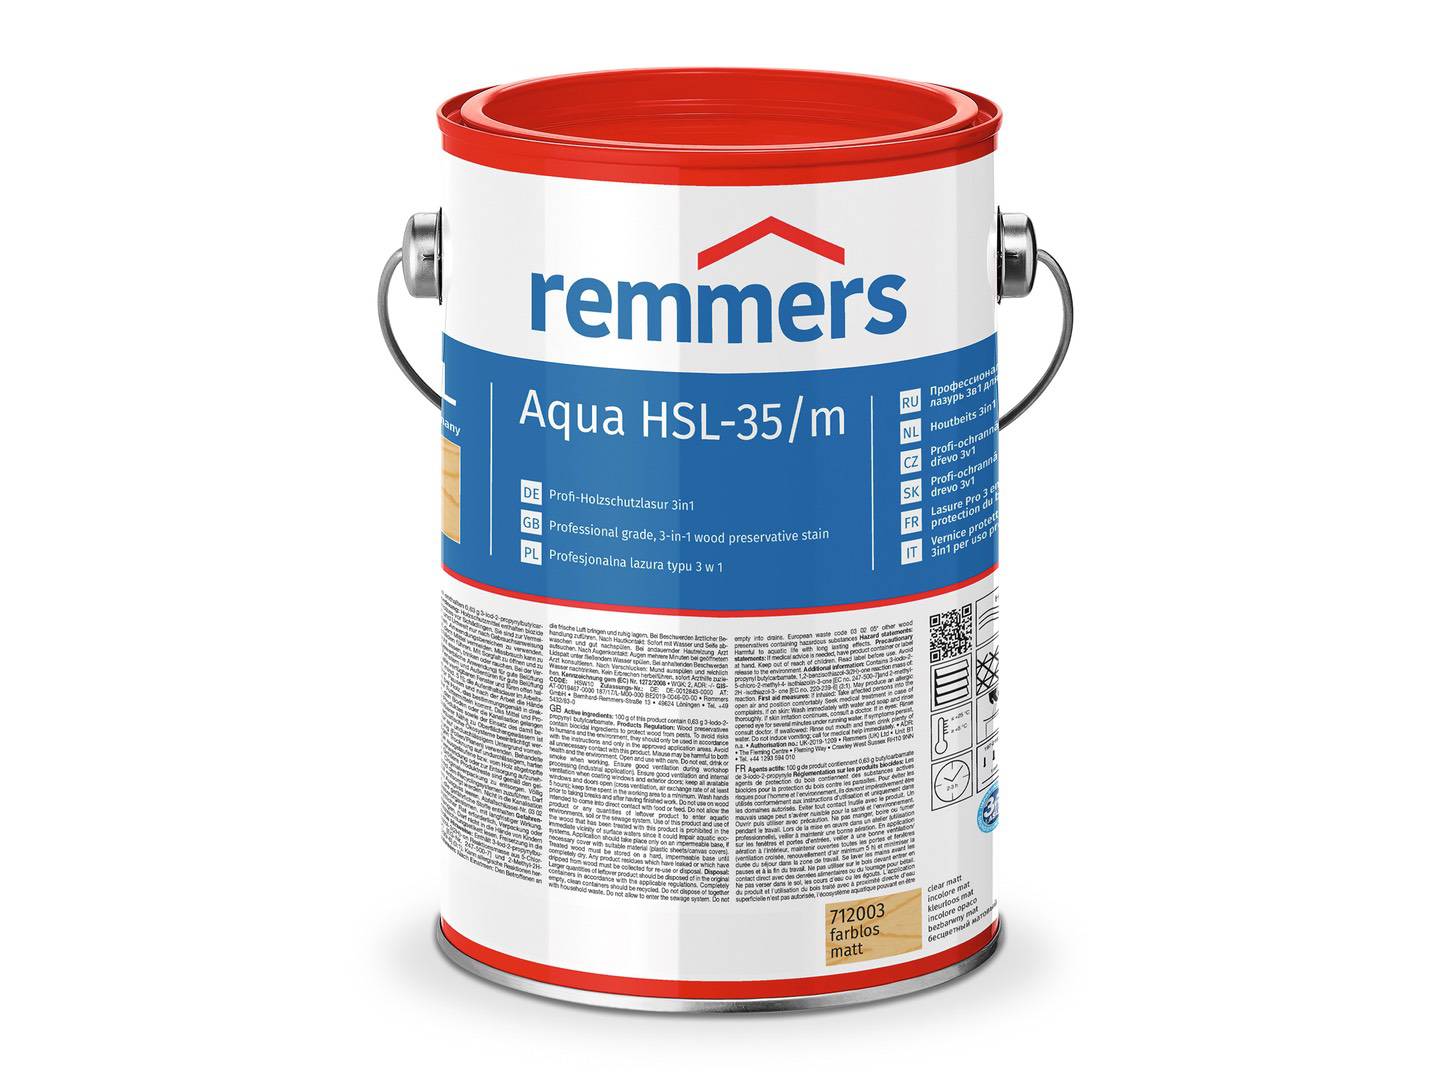 REMMERS Aqua HSL-35/m-Profi-Holzschutz-Lasur 3in1 pinie/lärche (RC-260) 2,50 l